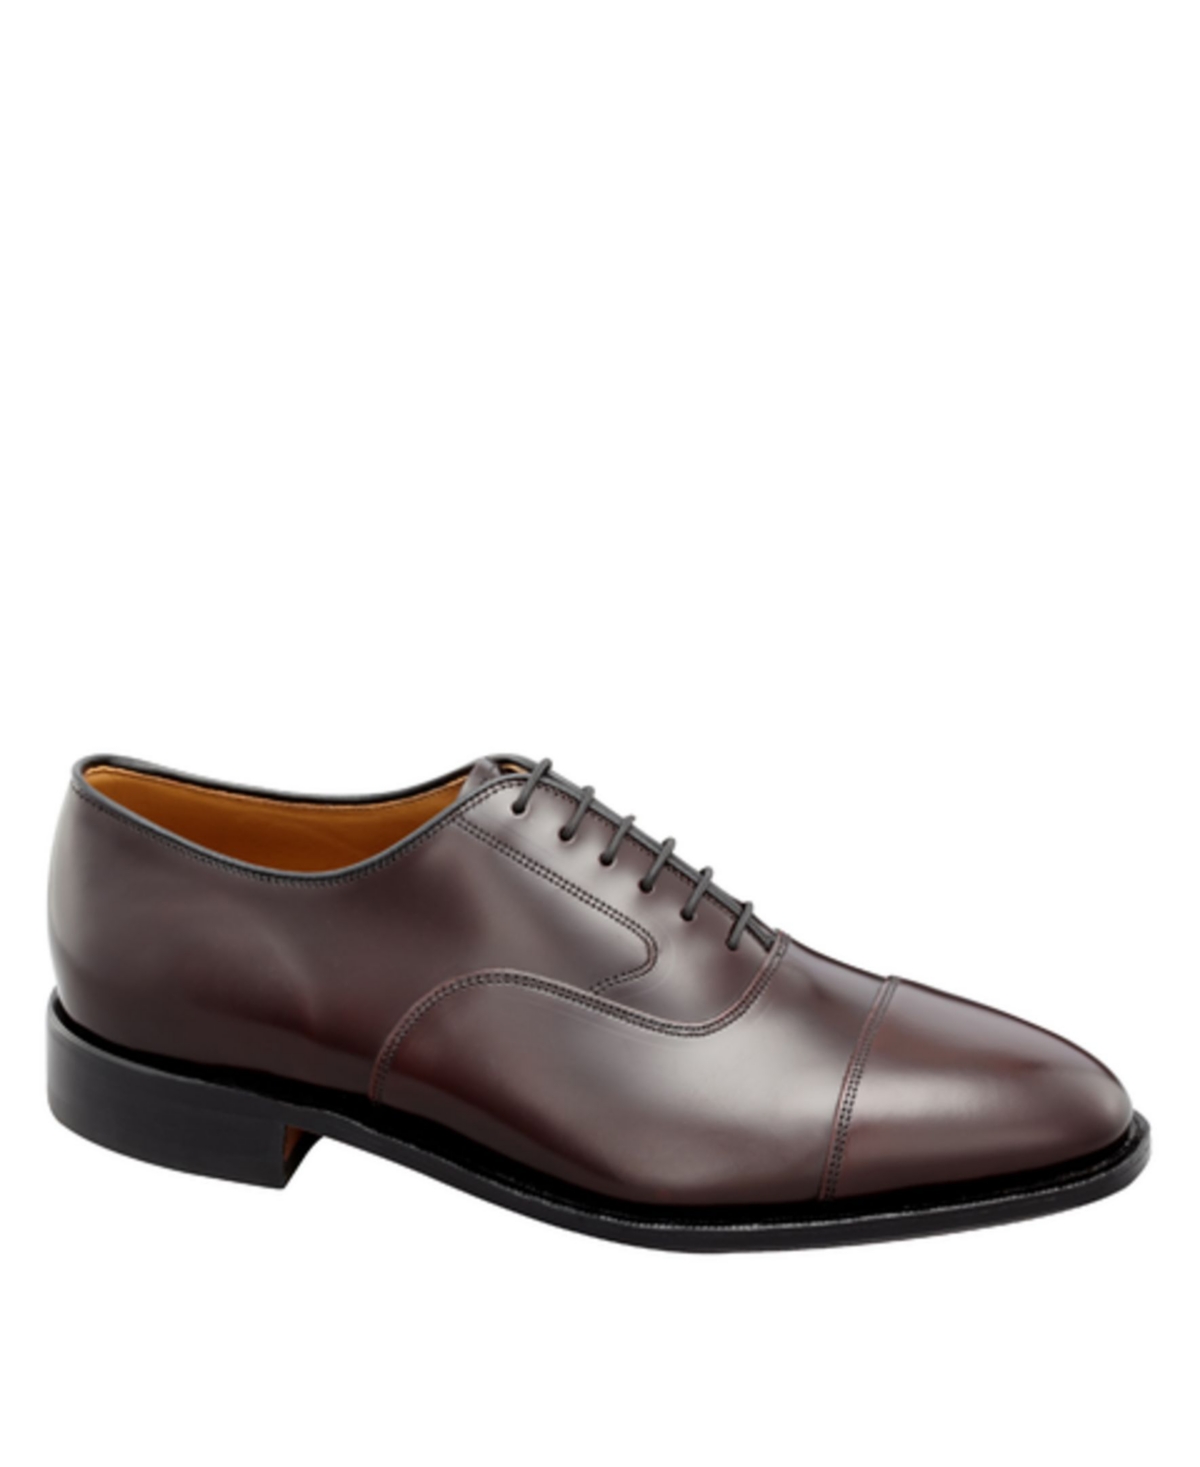 Men's Melton Cap Toe Shoes - Burgundy